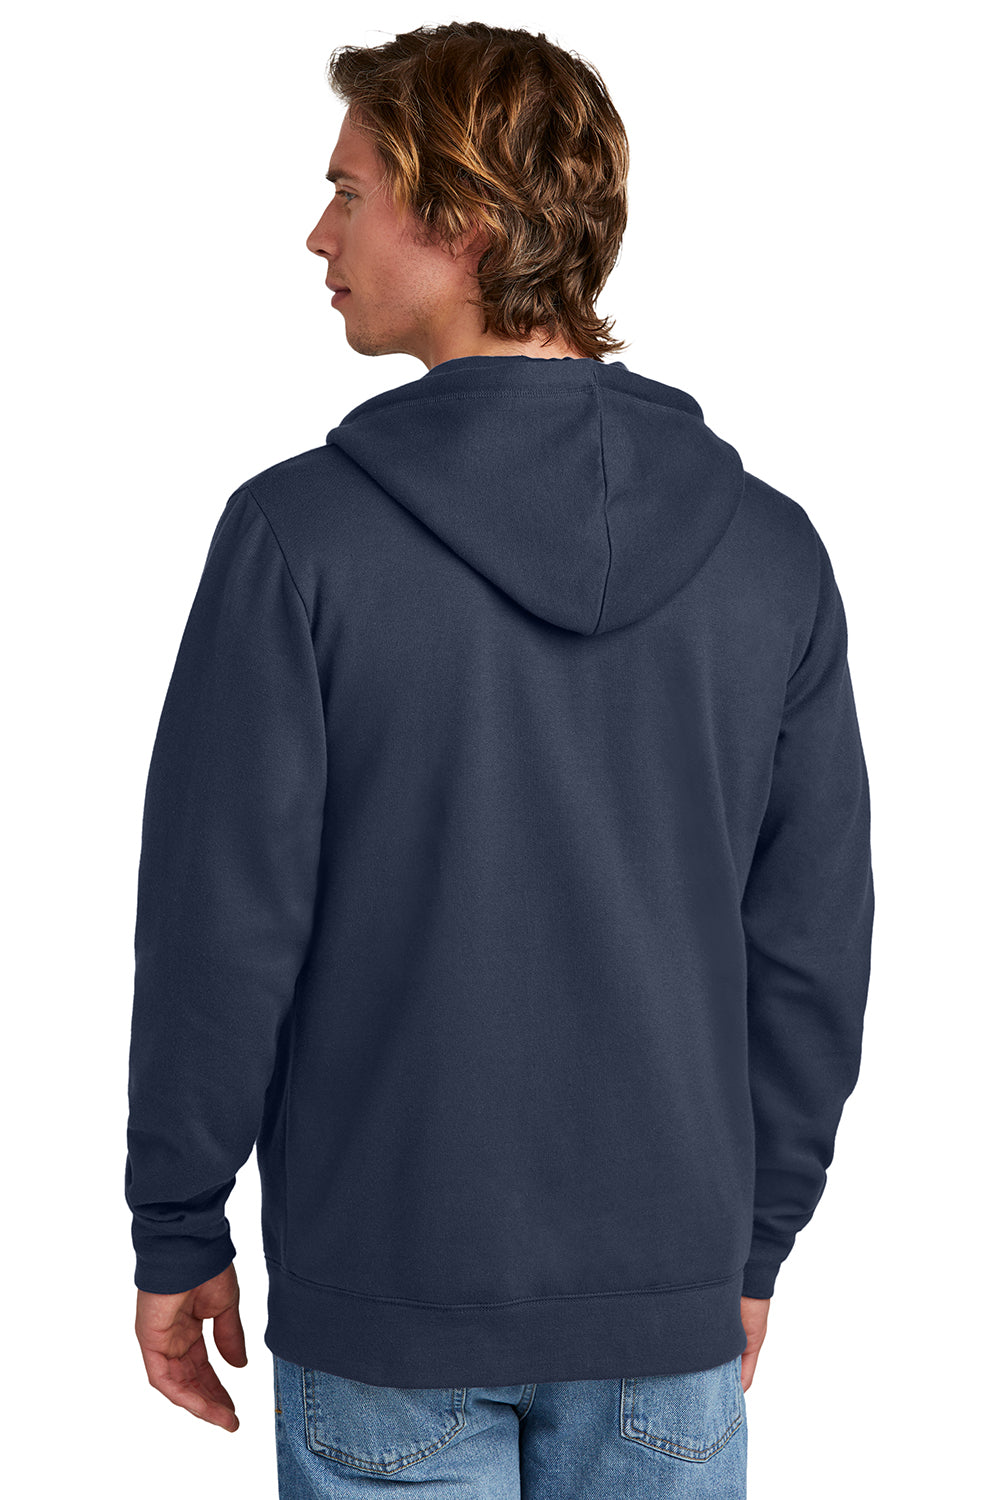 New Era NEA551 Mens Comeback Fleece Full Zip Hooded Sweatshirt Hoodie True Navy Blue Back